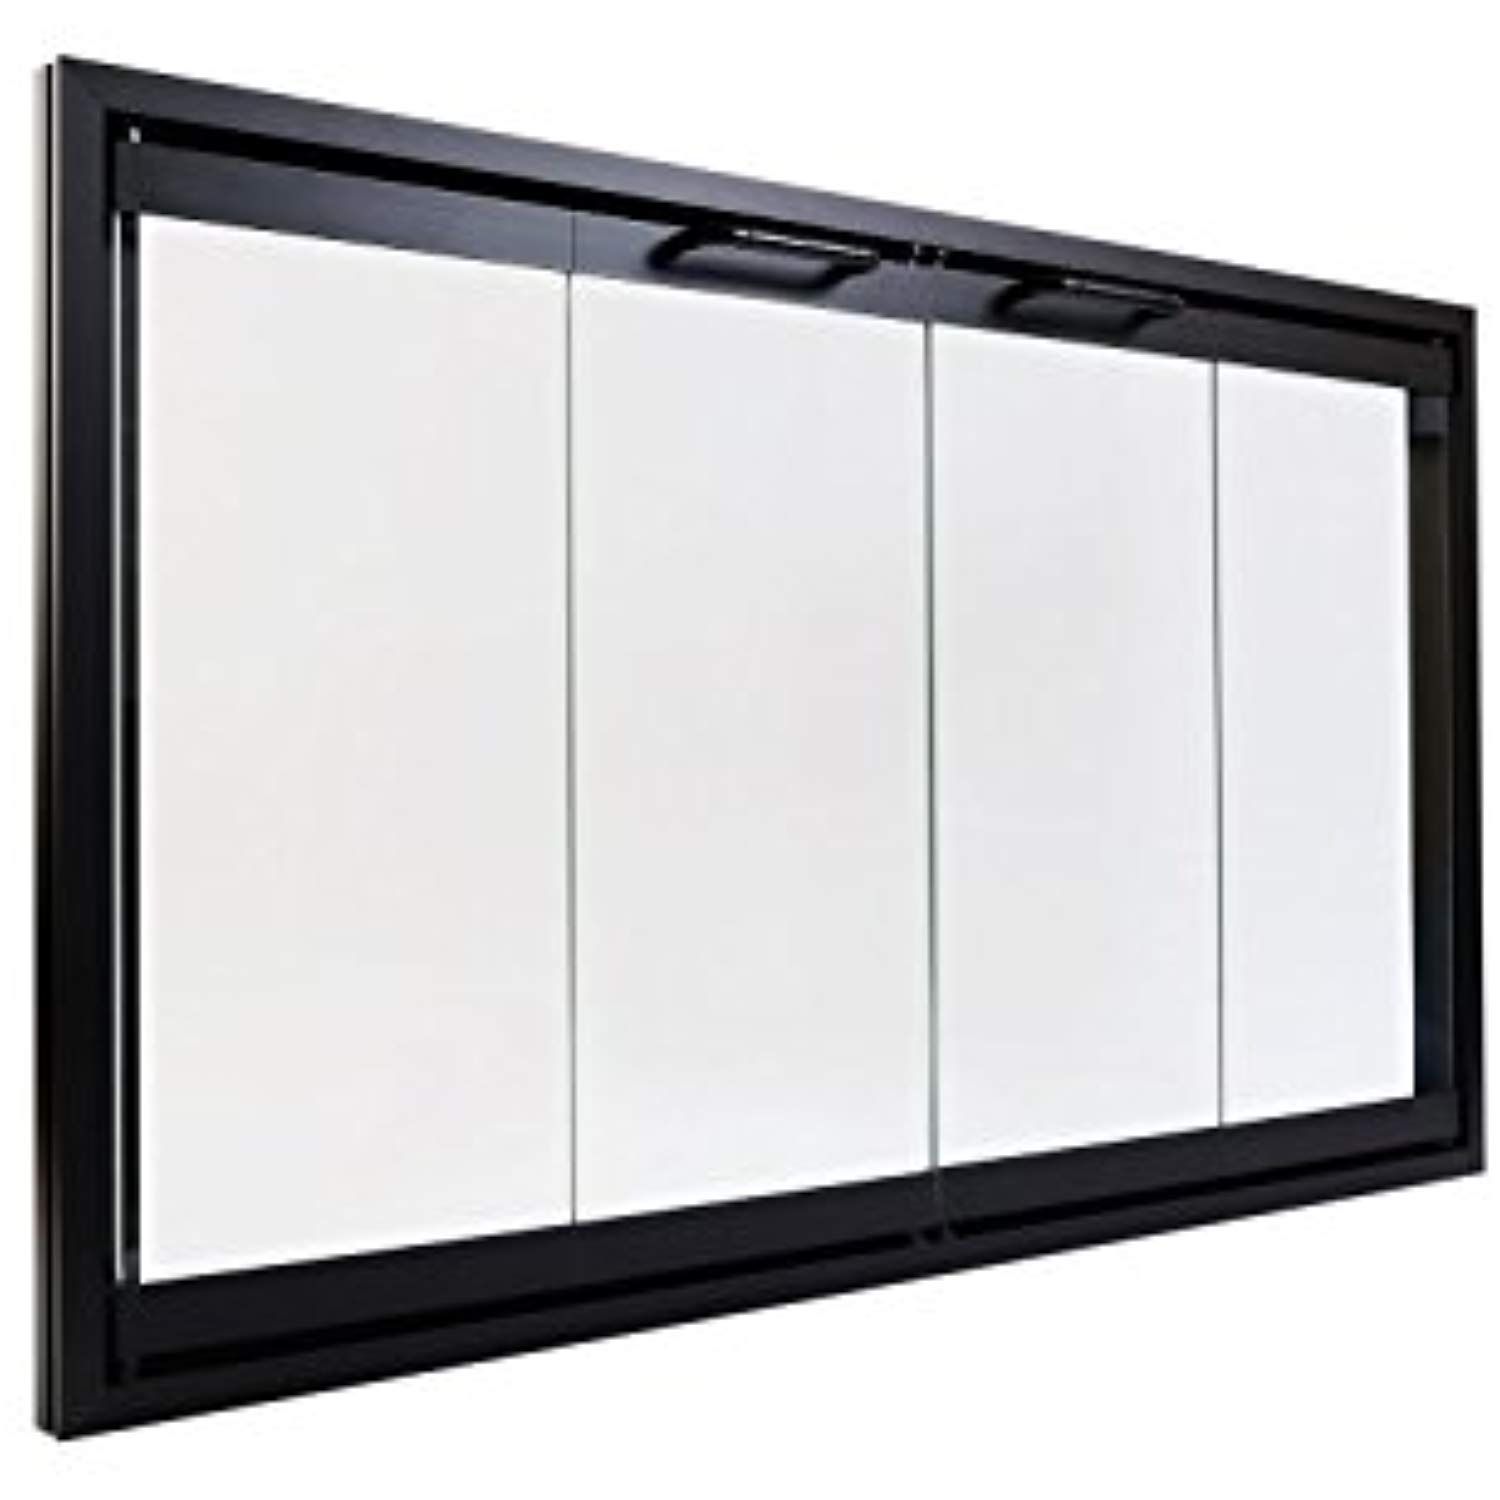 Heatilator Fireplace Doors Luxury Heatilator Bi Fold Glass Fireplace Door Easy to Install